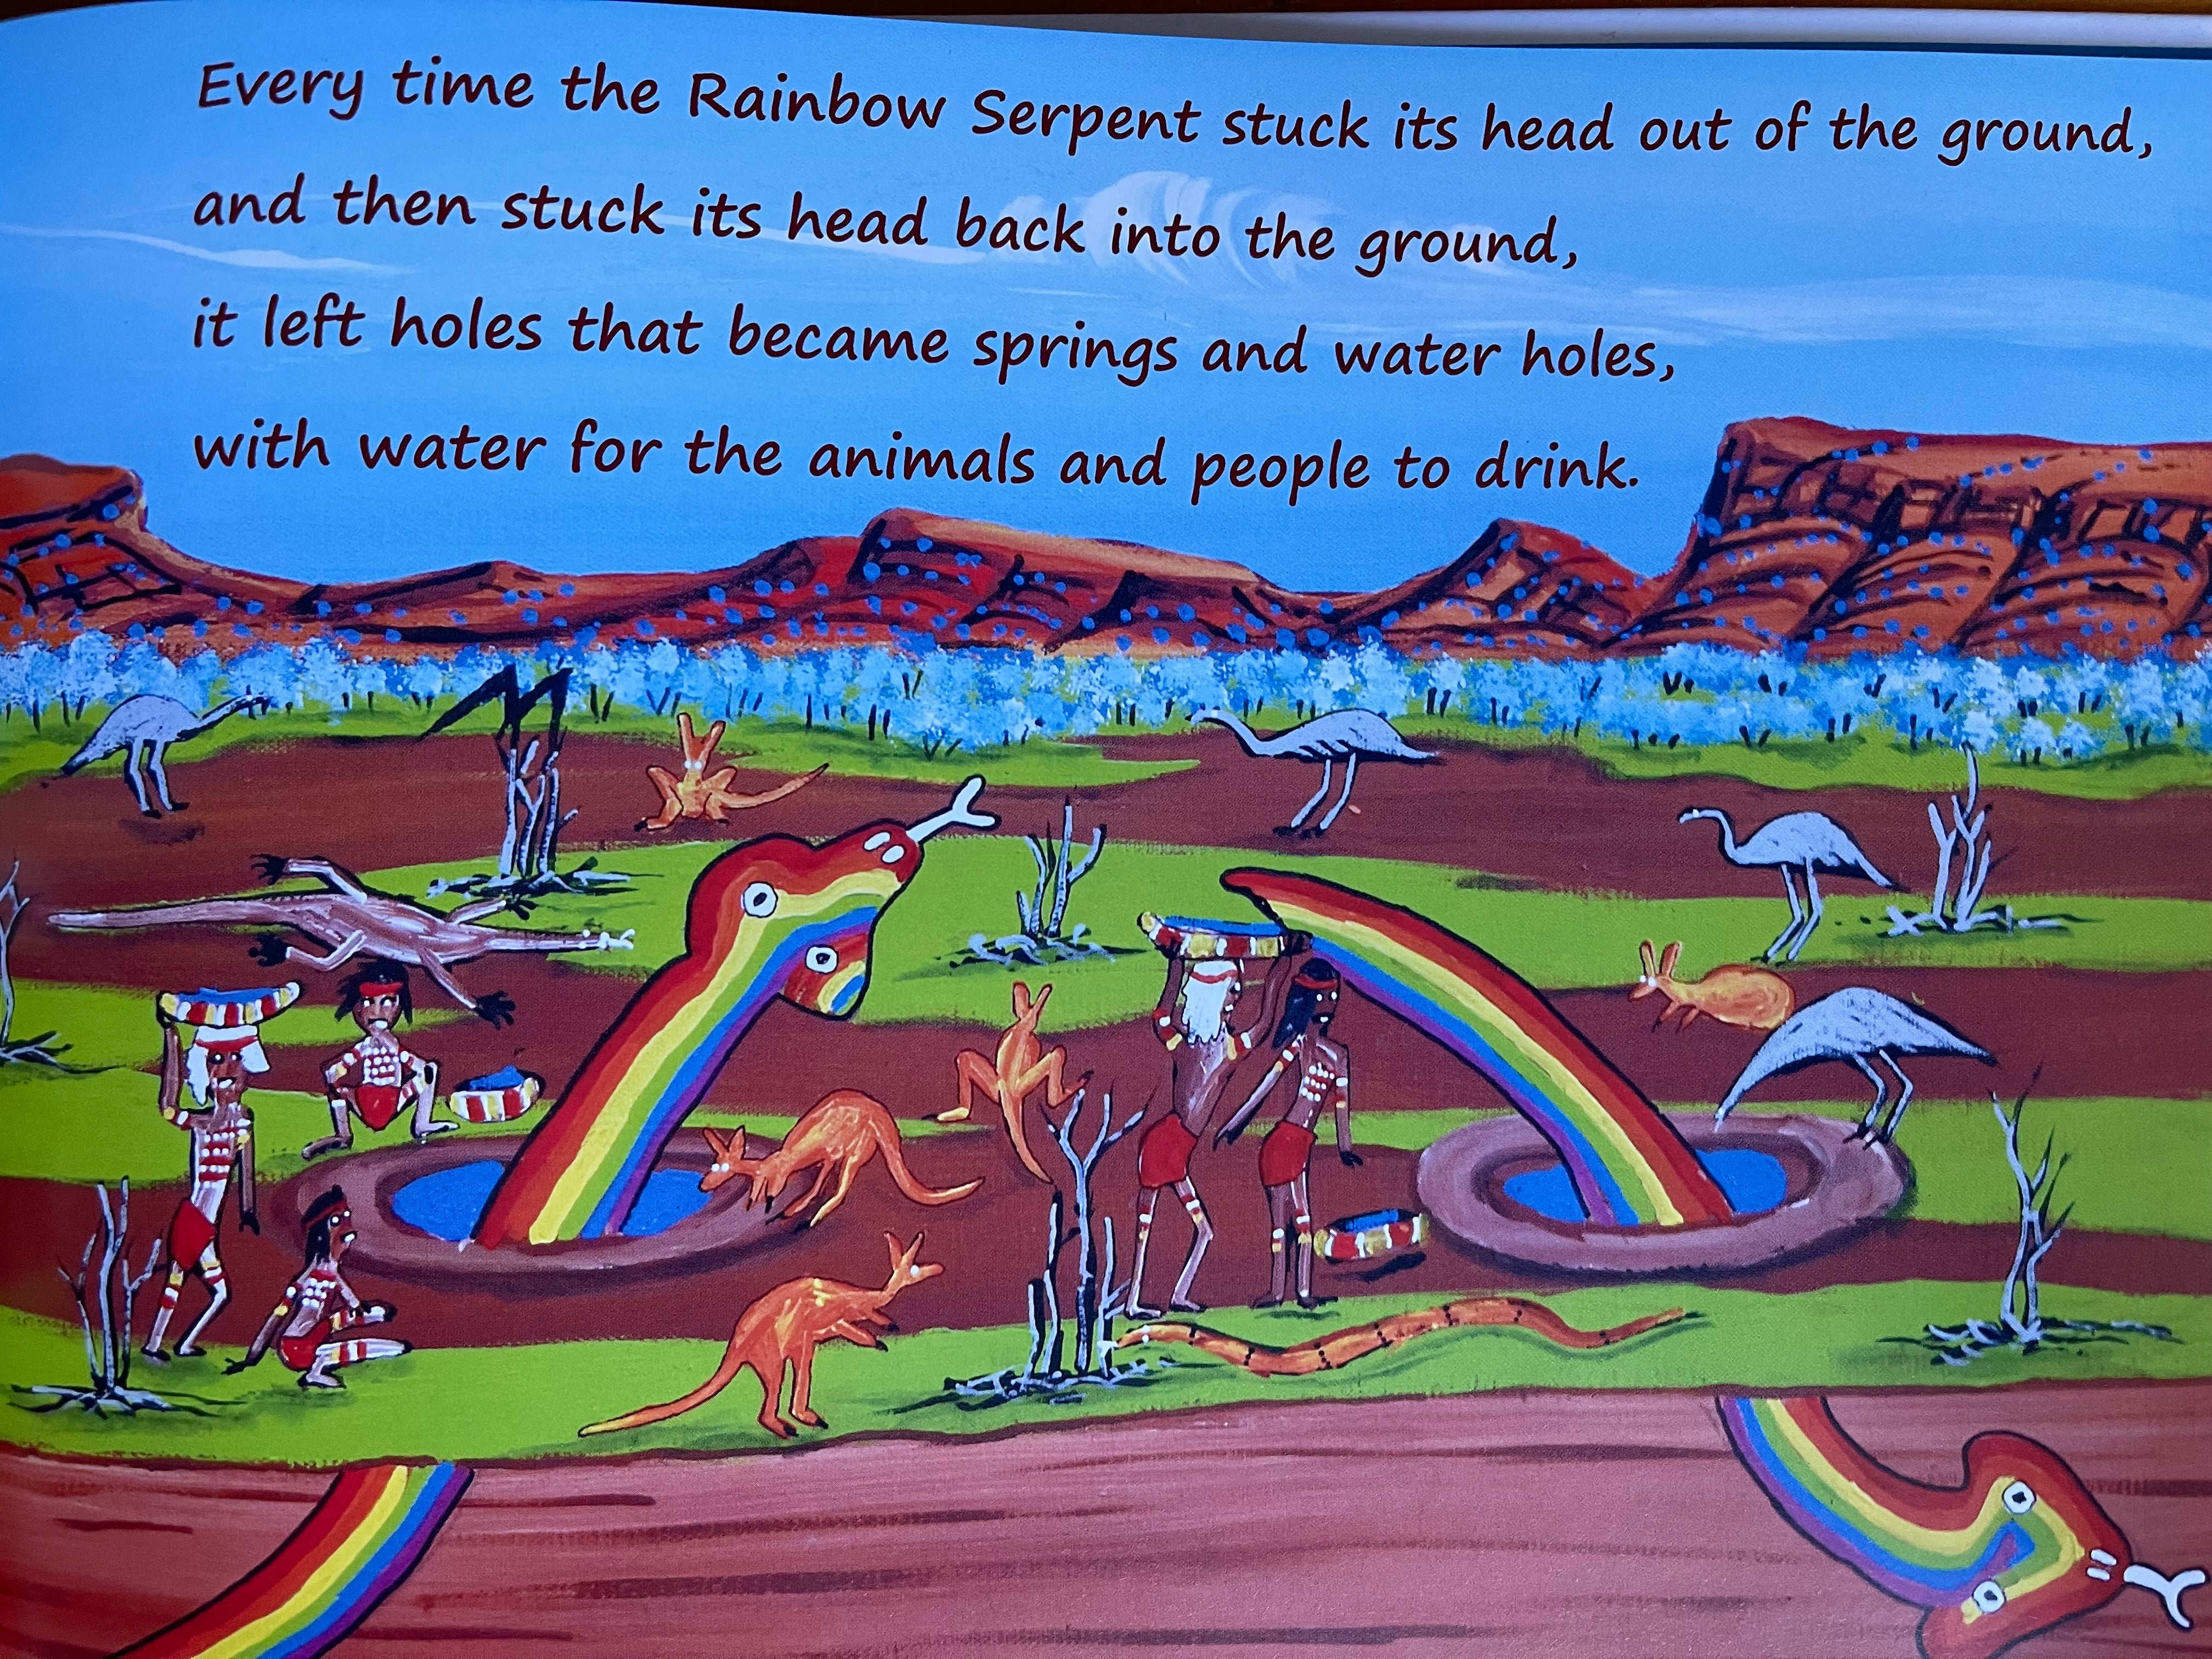 Hardcover Book - The Rainbow Serpent - David Welch - Reggie Sultan